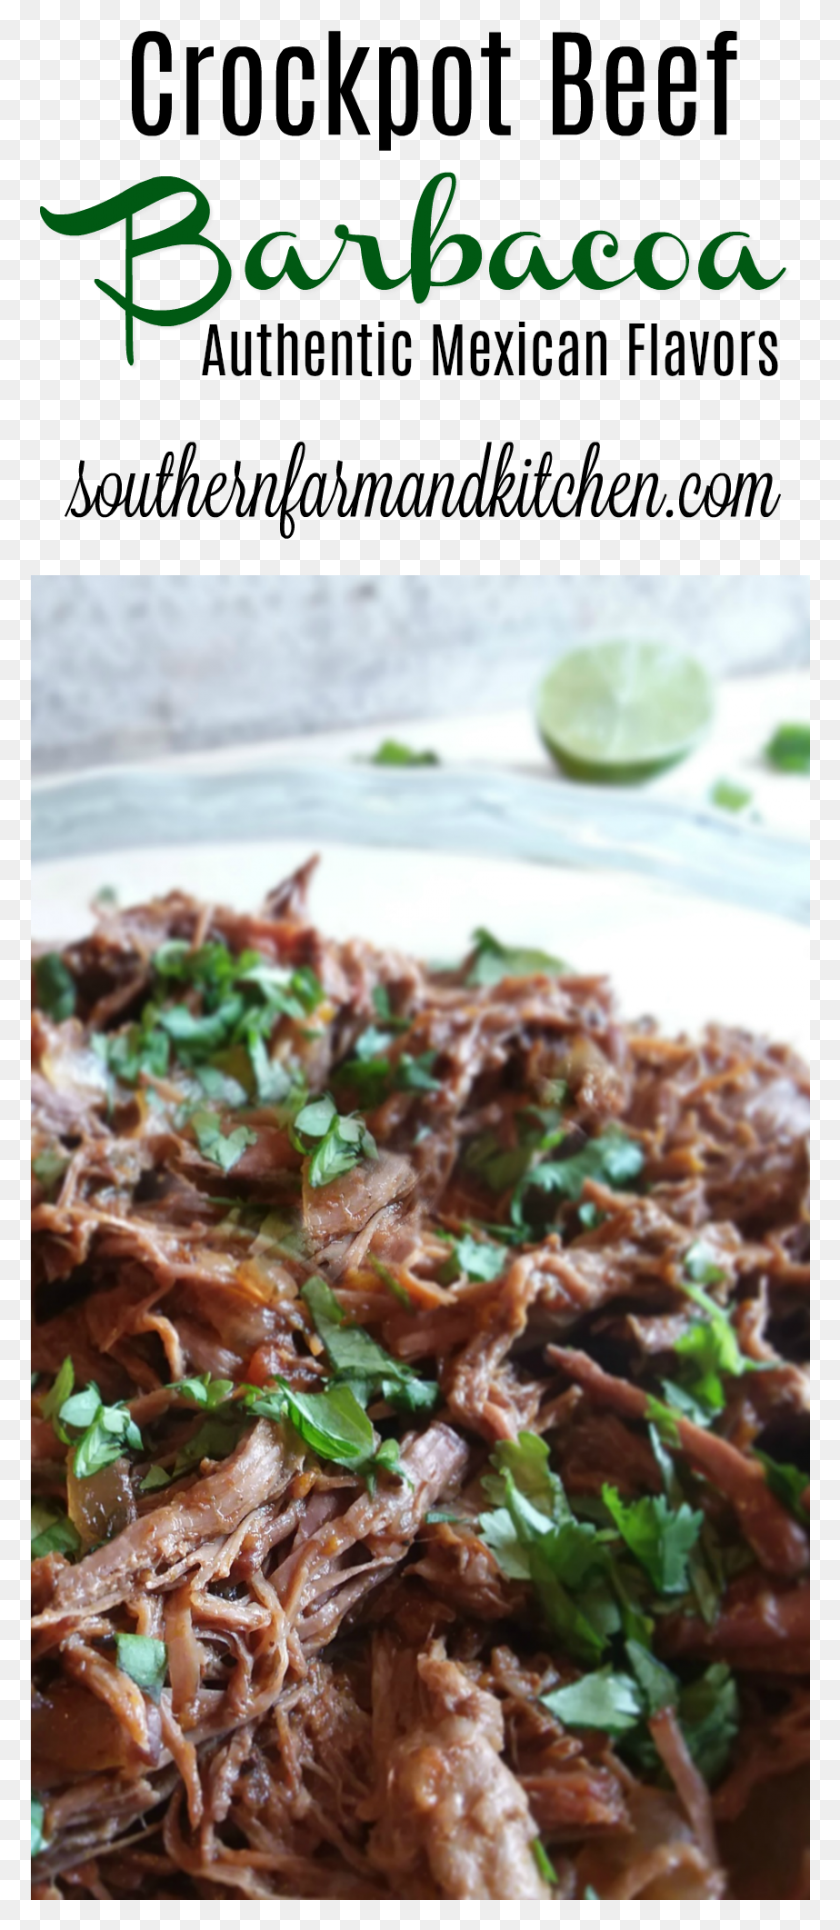 858x2058 Barbacoa Beef Mexican Crockpot Recipes Lime, Plant, Food, Produce Descargar Hd Png